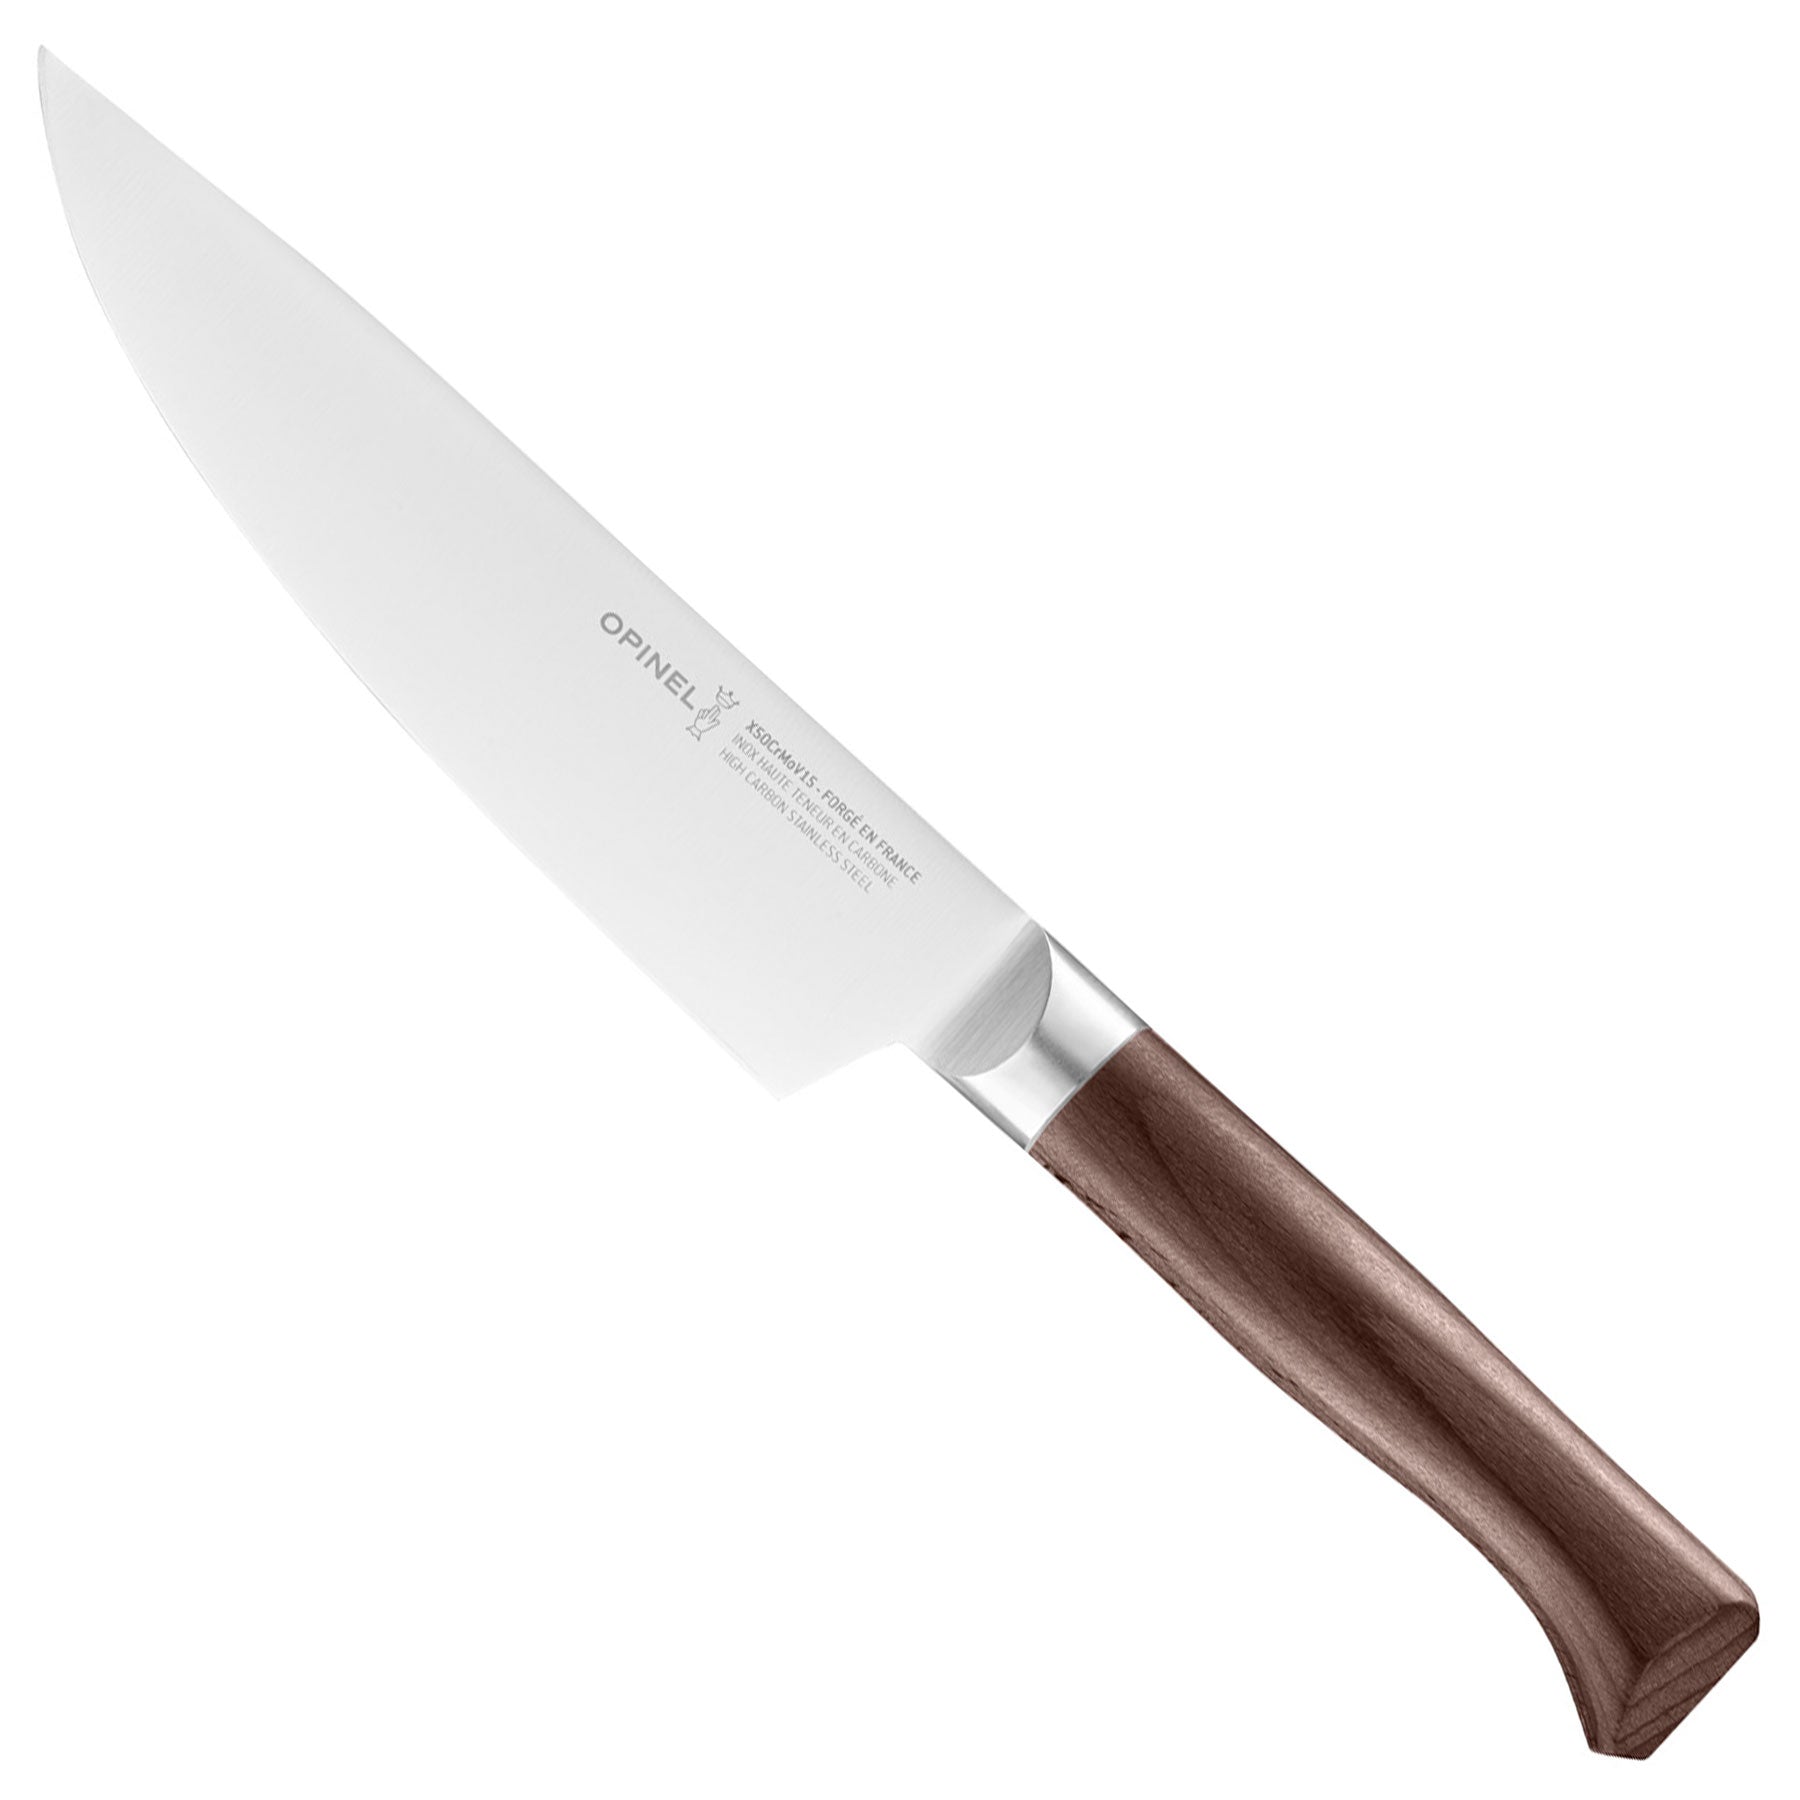 French Chef Knife (Aluminum Handle)